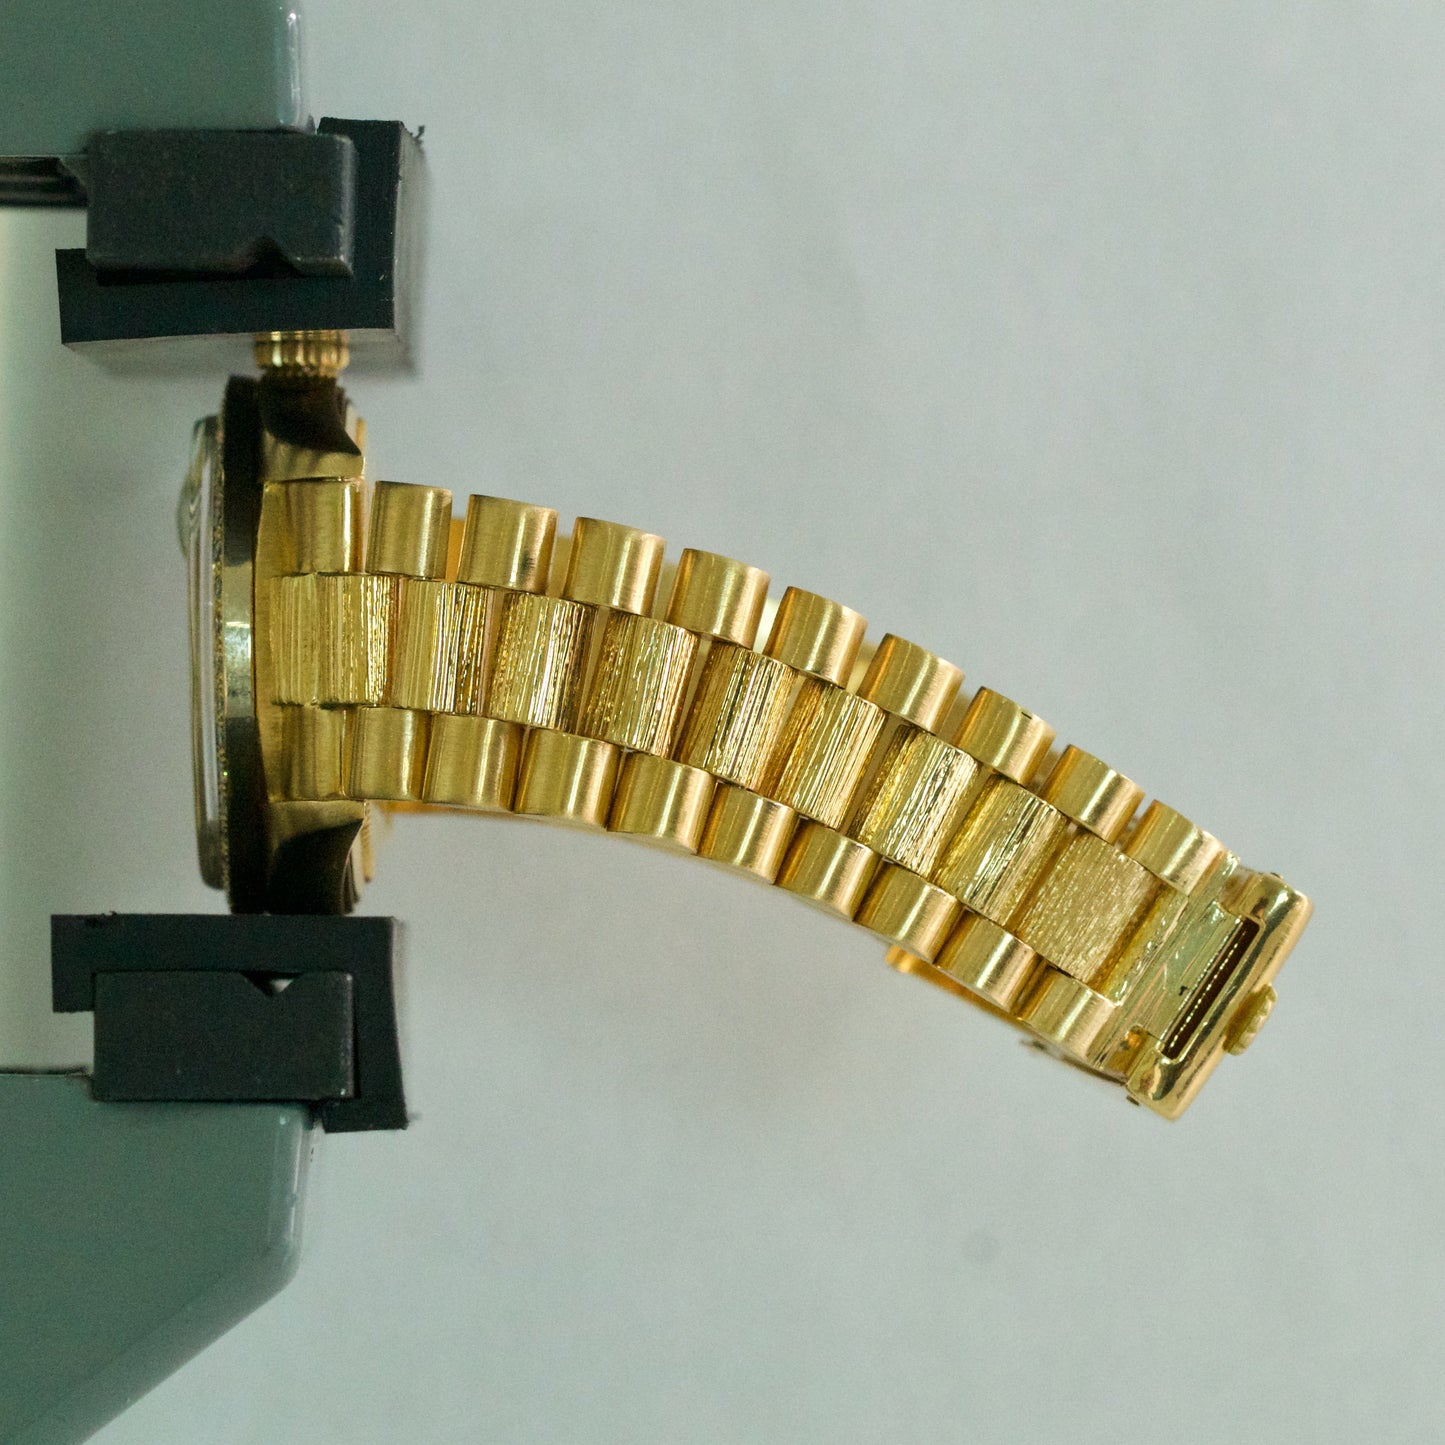 Rolex Day-Date President 36mm 18K Yellow Gold Champagne DIAMOND 1803 BARK Watch